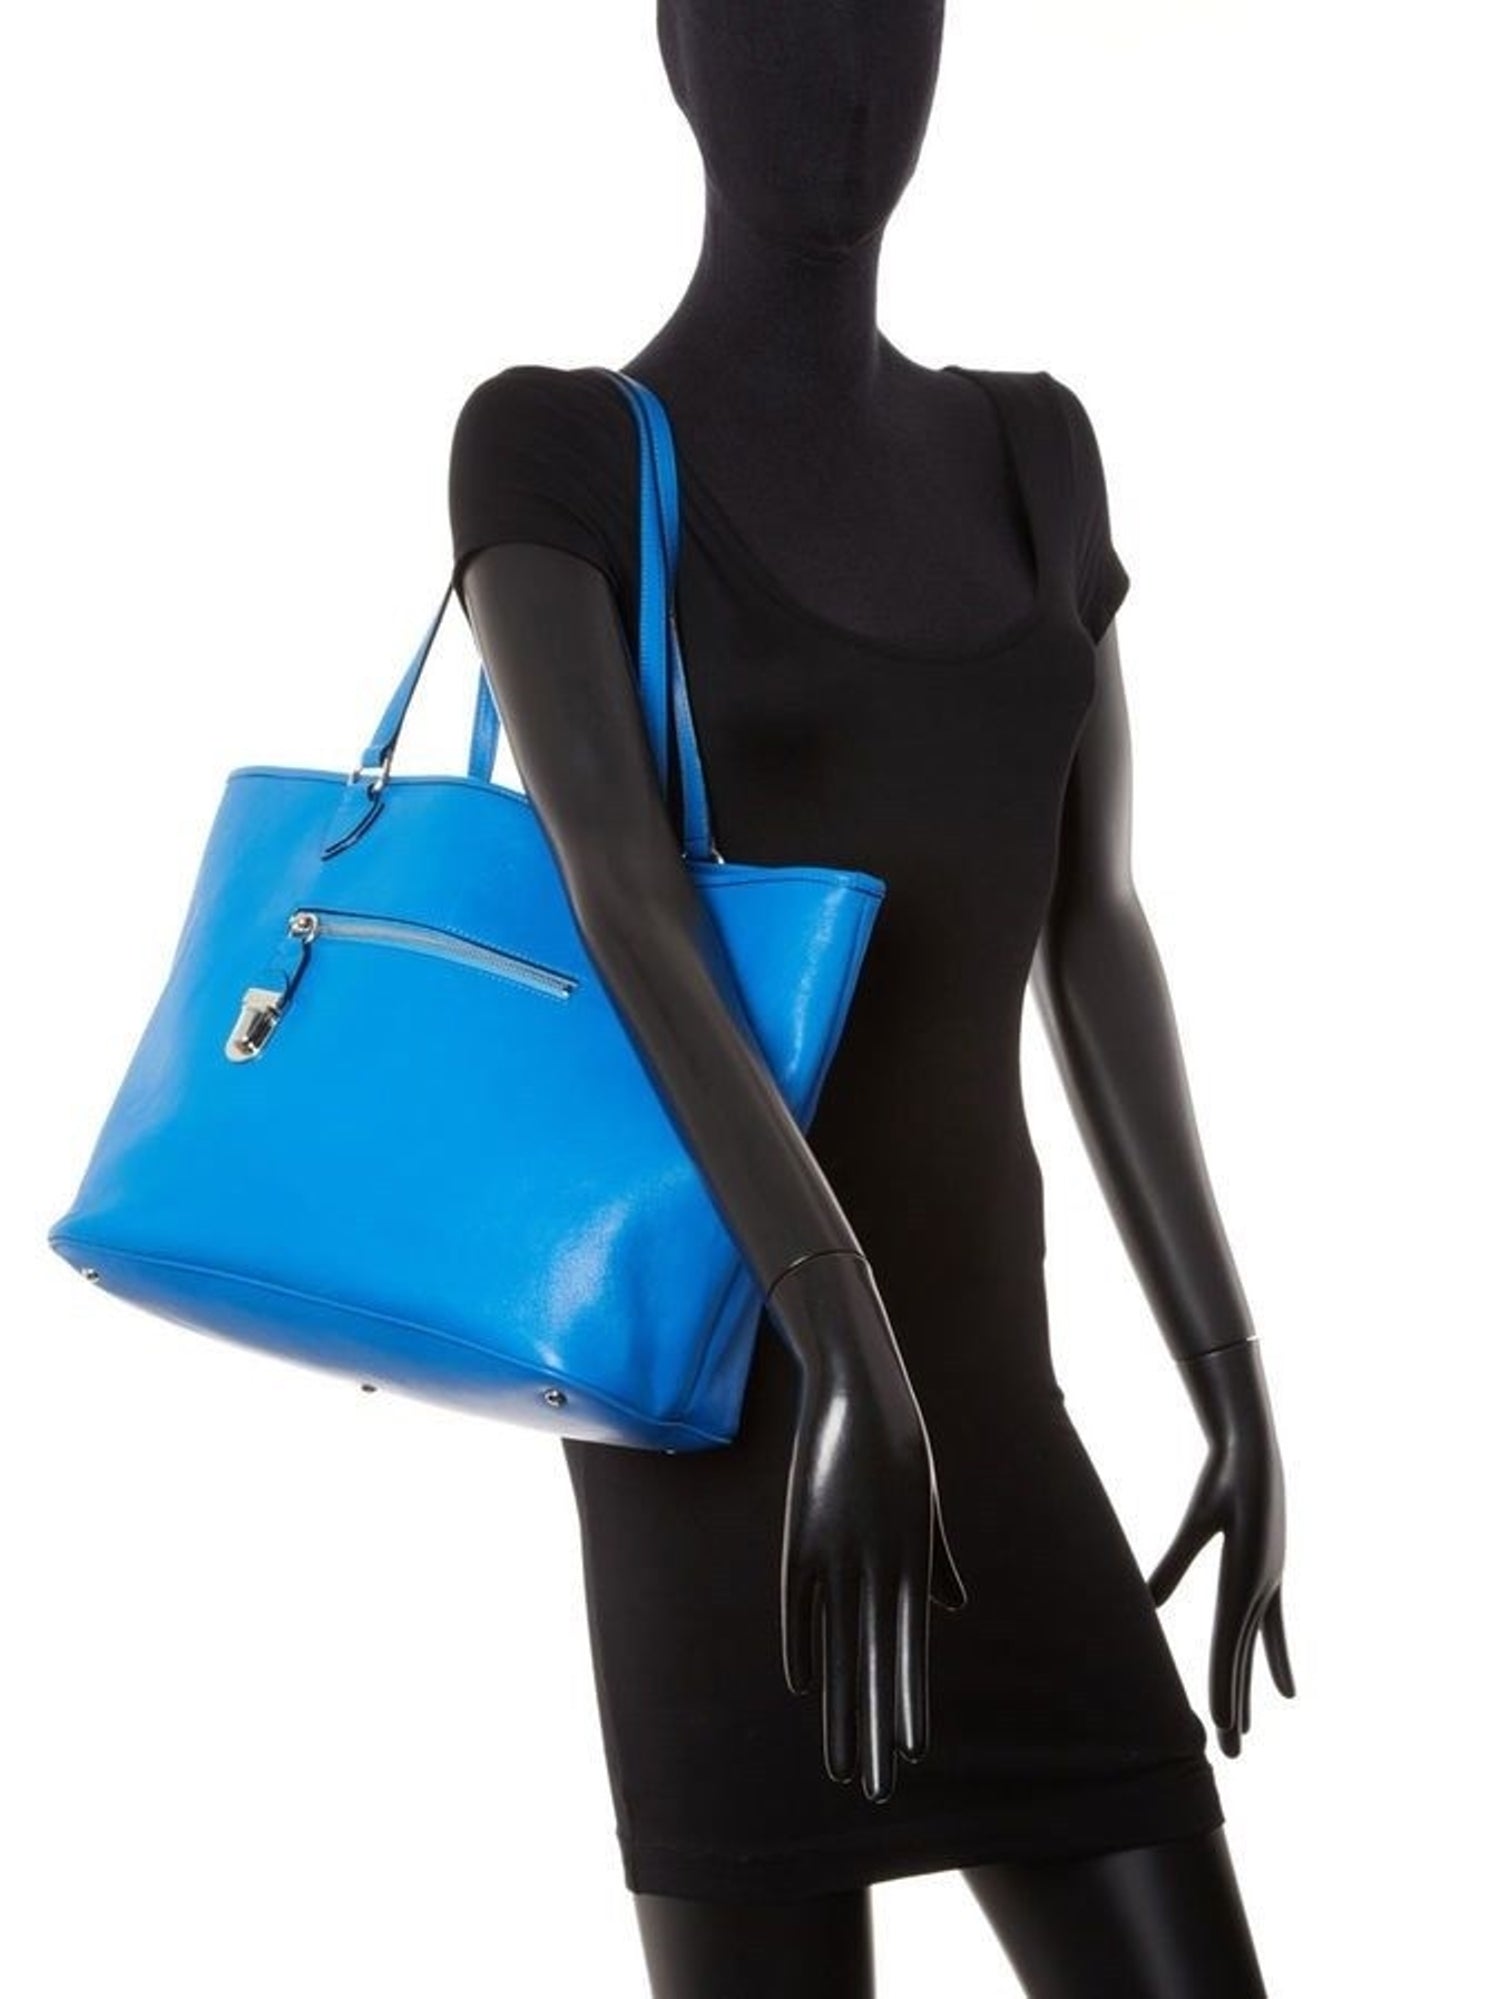 Marc Jacobs Manhattan Large Shopping Tote Bag $1095 Front Zip Lock silver NIB